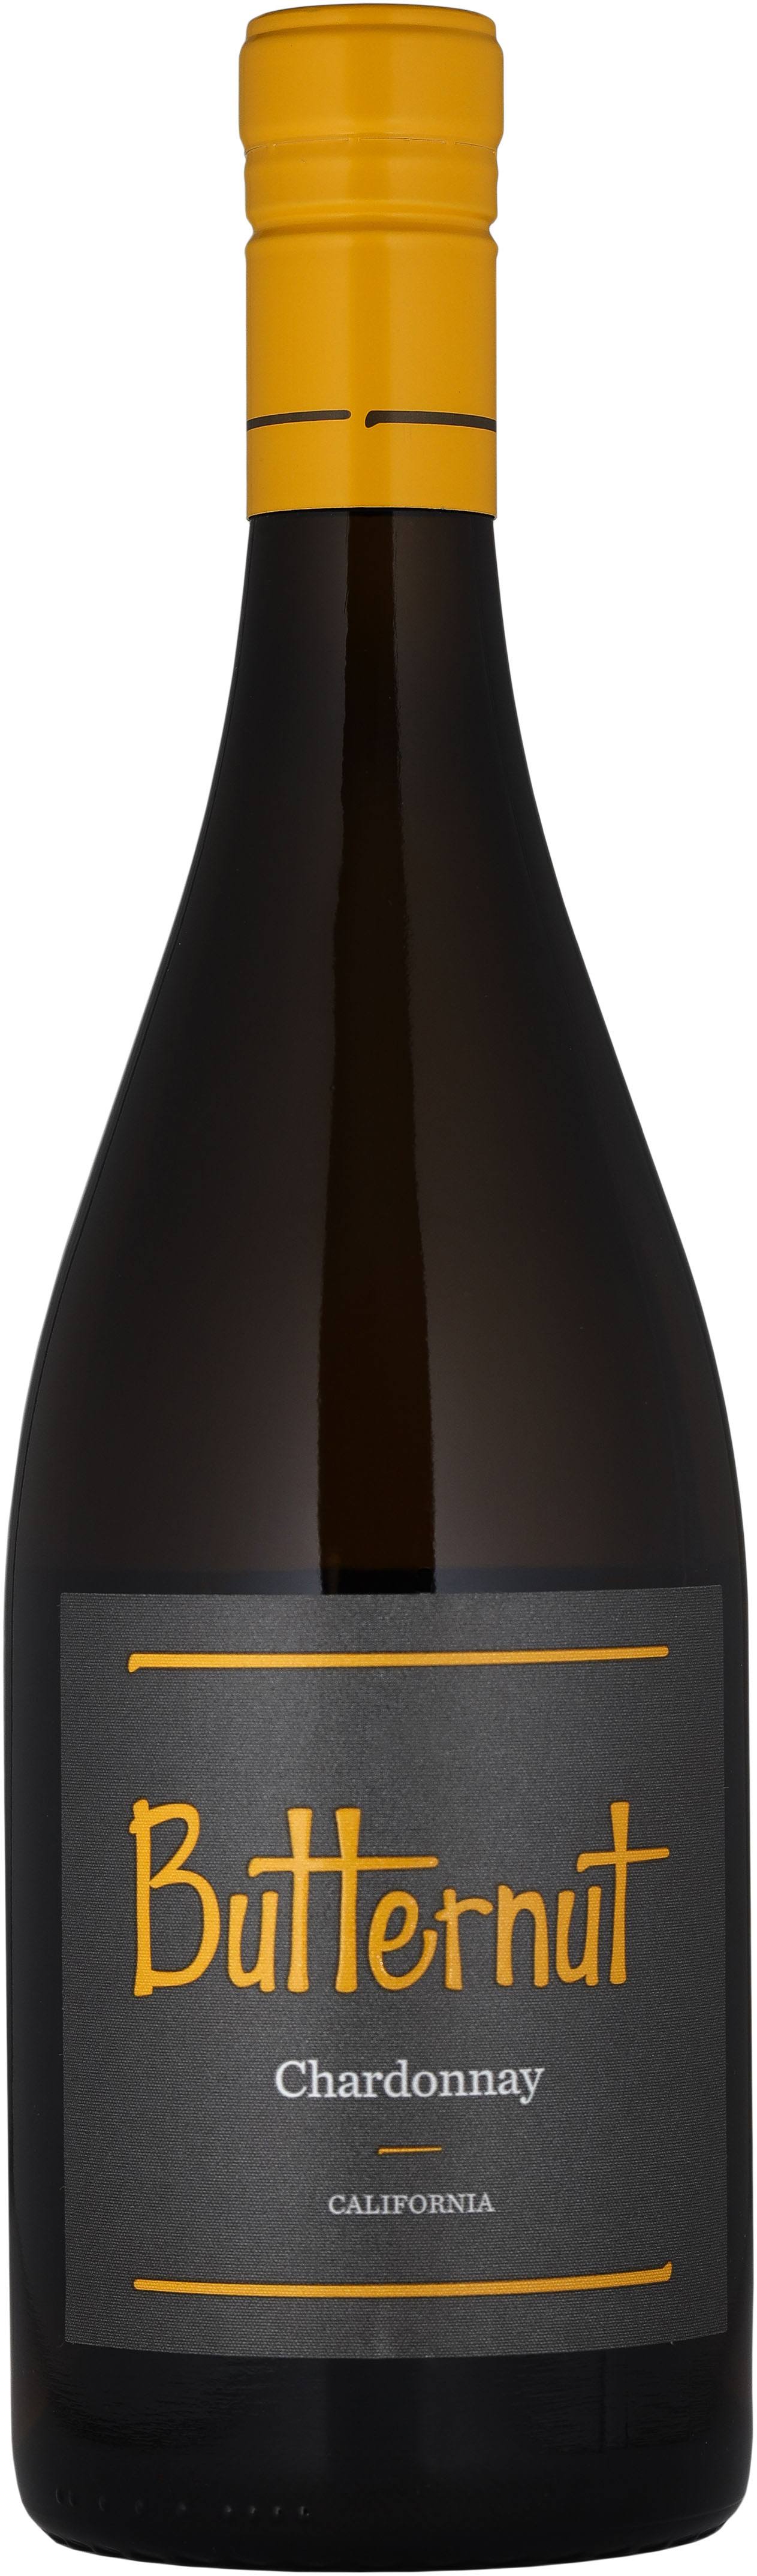 Butternut Chardonnay, California, 2011 - 750 ml